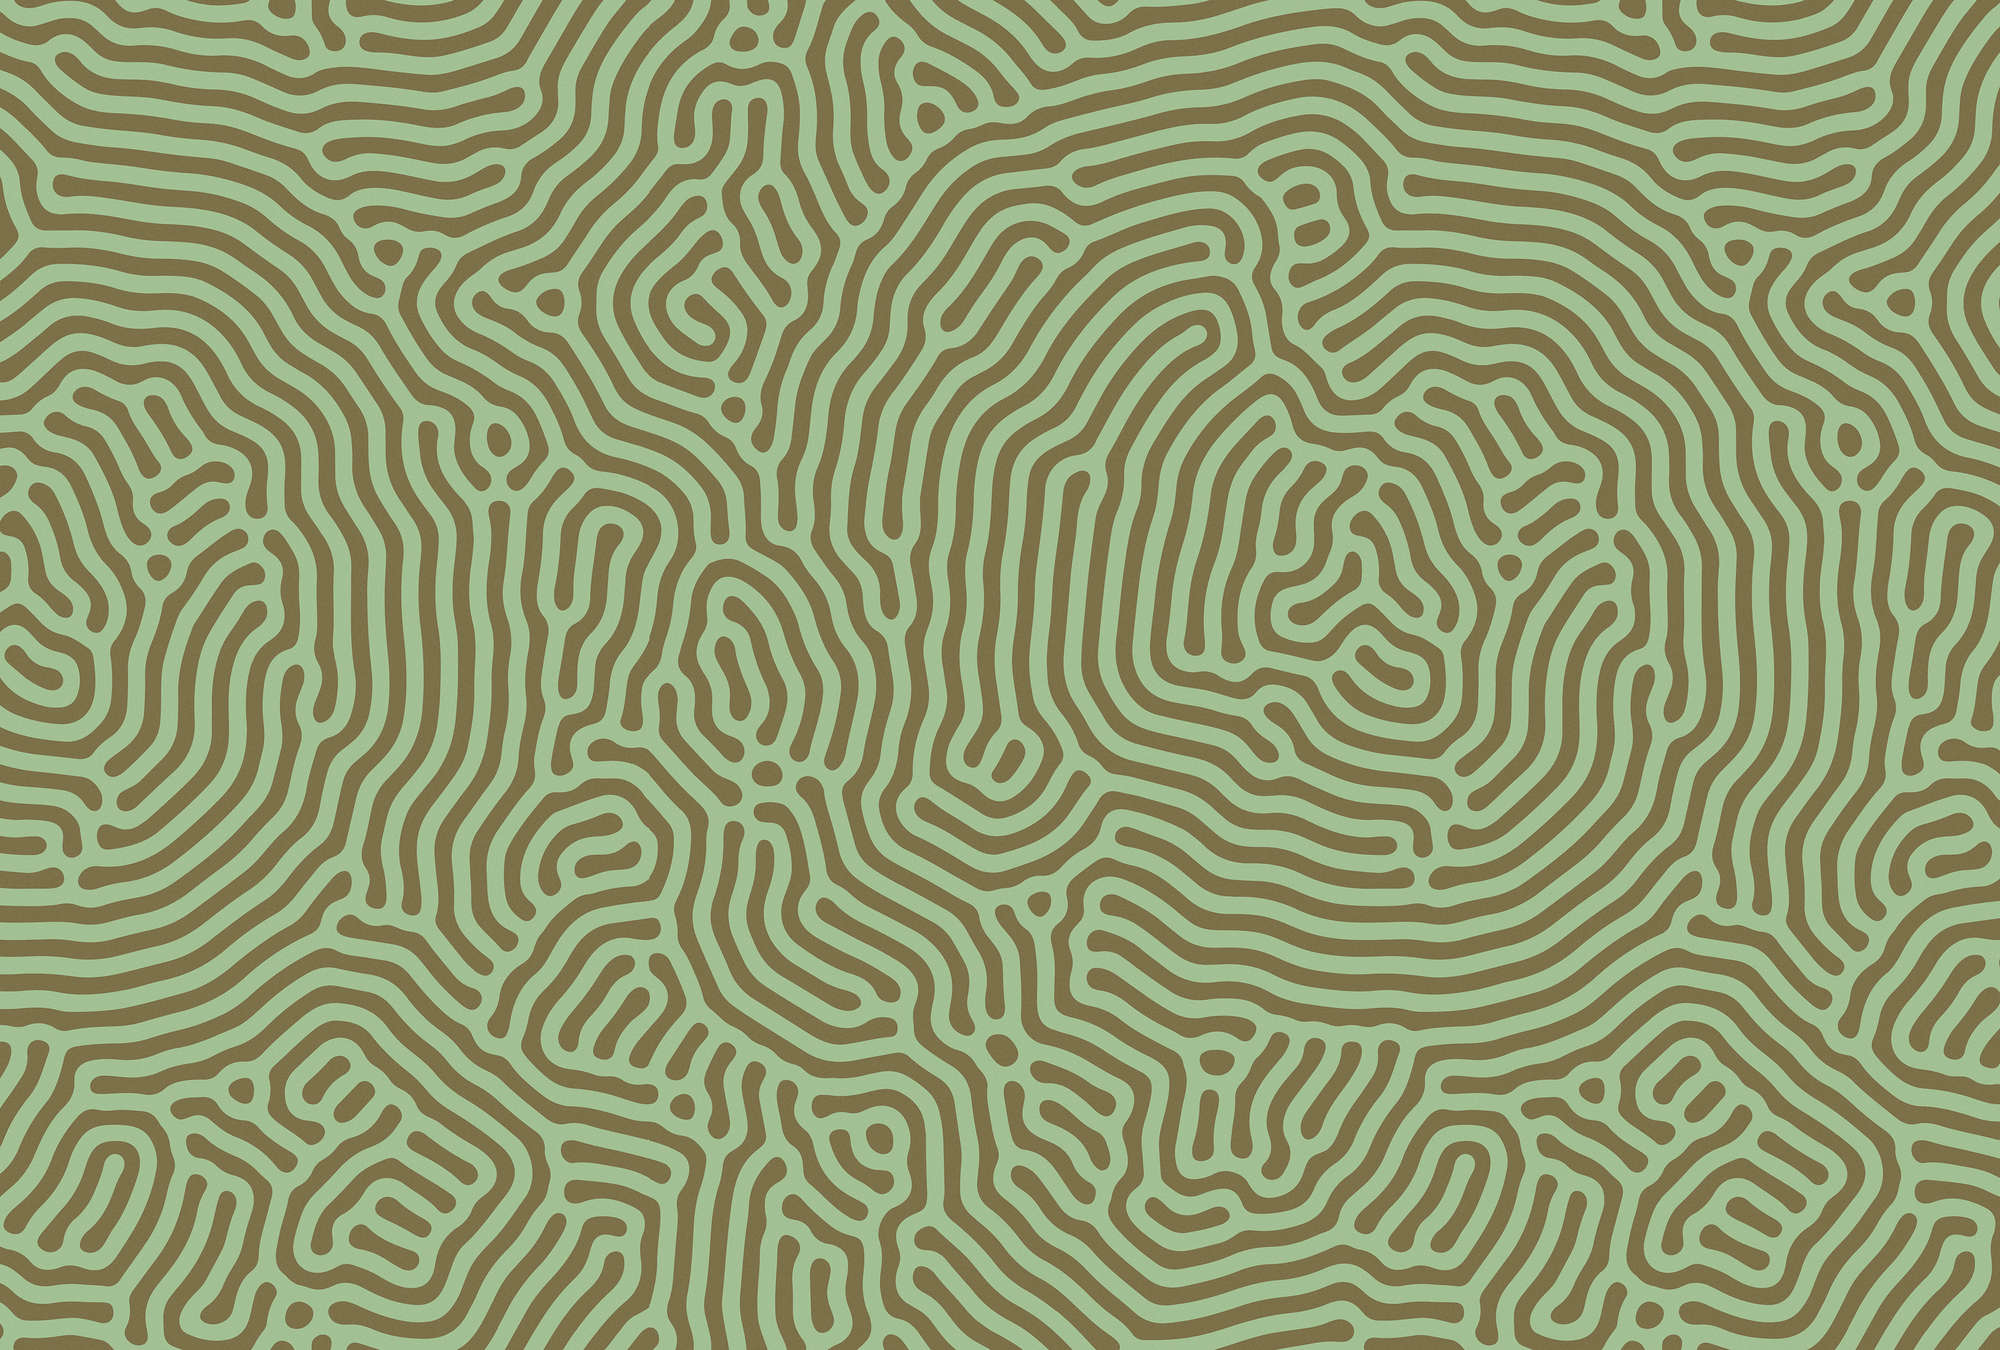             Sahel 1 - Papier peint vert motif labyrinthe vert sauge
        